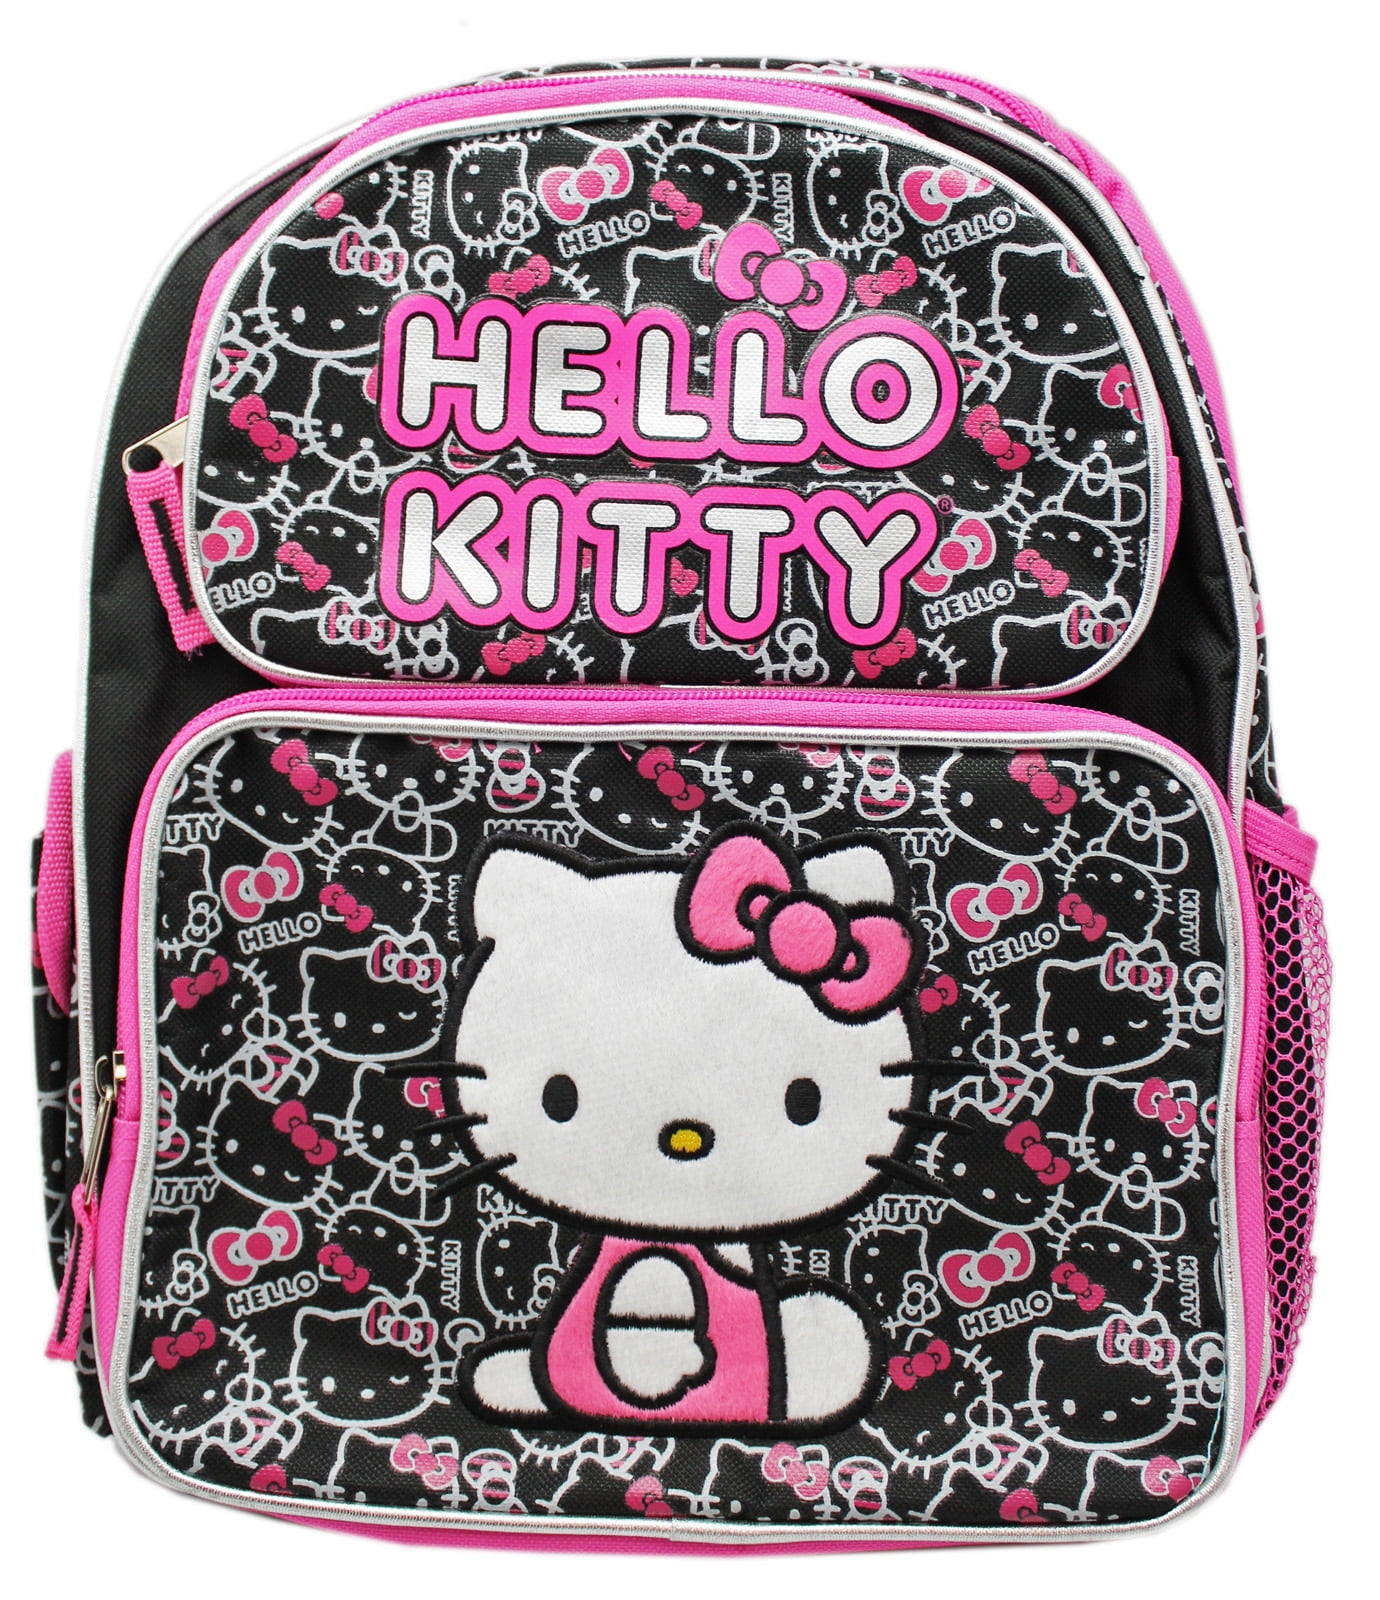 Backpack 16" Sanrio Hello Kitty Black Pink Silver Glitter Stars NEW 